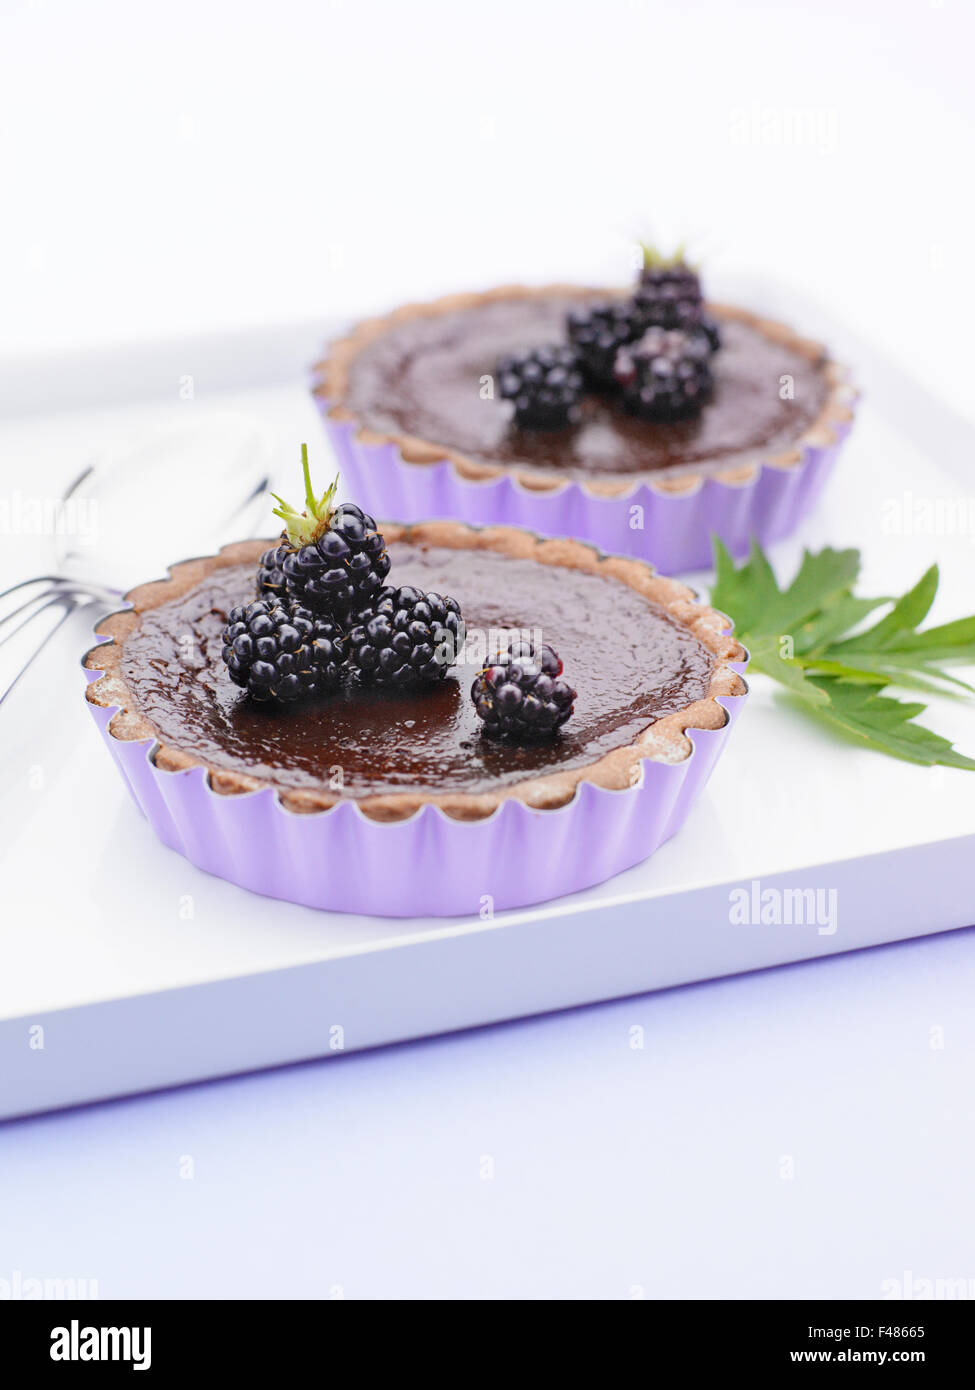 Chocolate pie and blackberry. Stock Photo